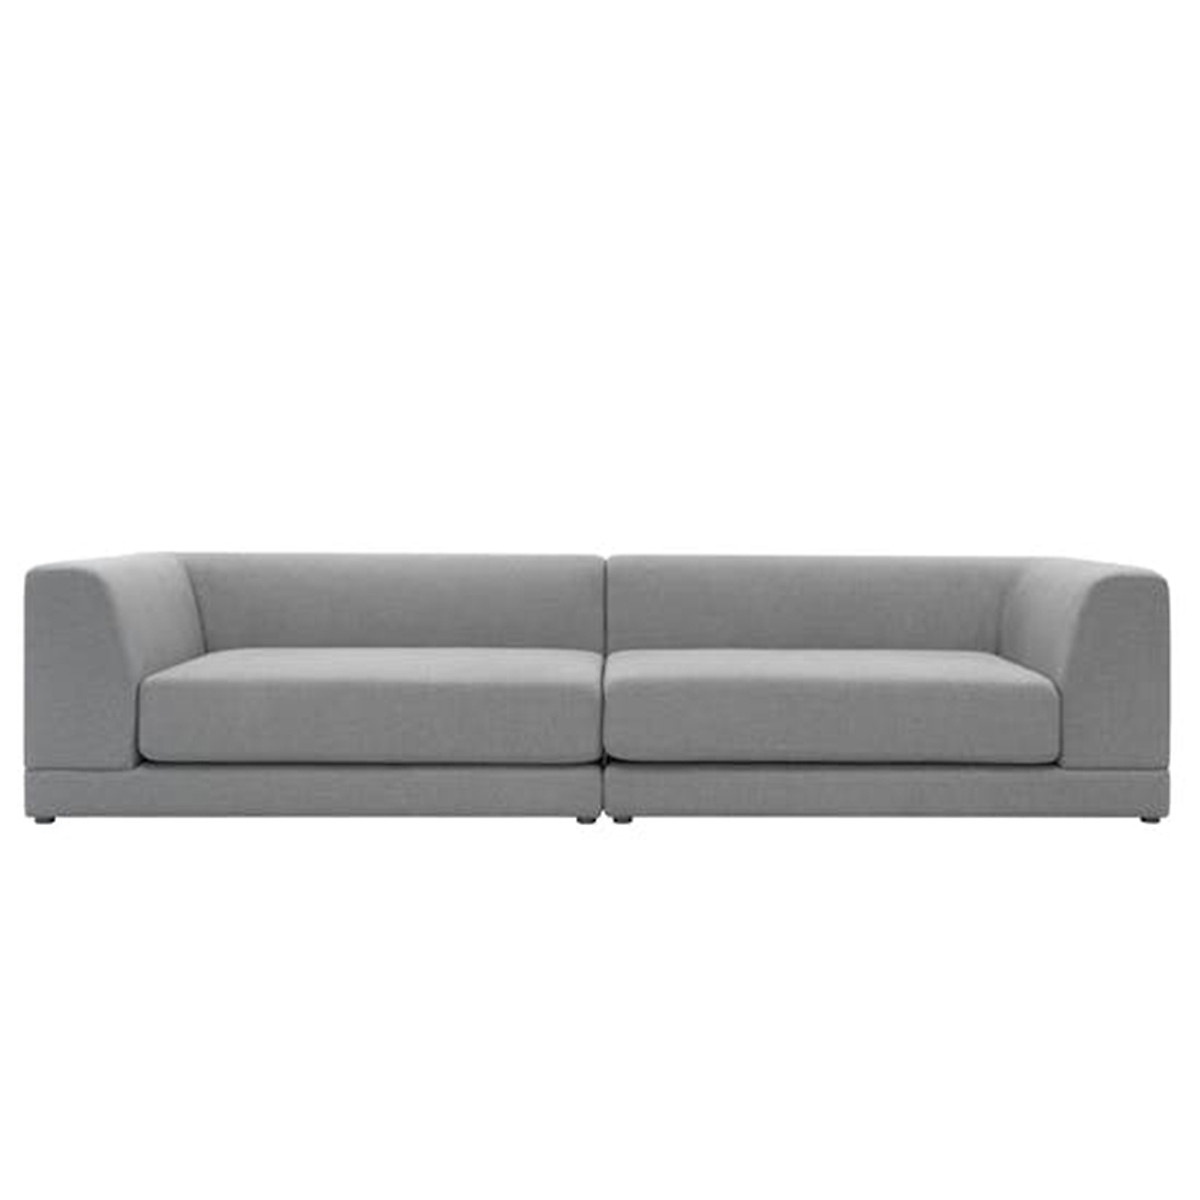 Sofa băng Abby - 1m6